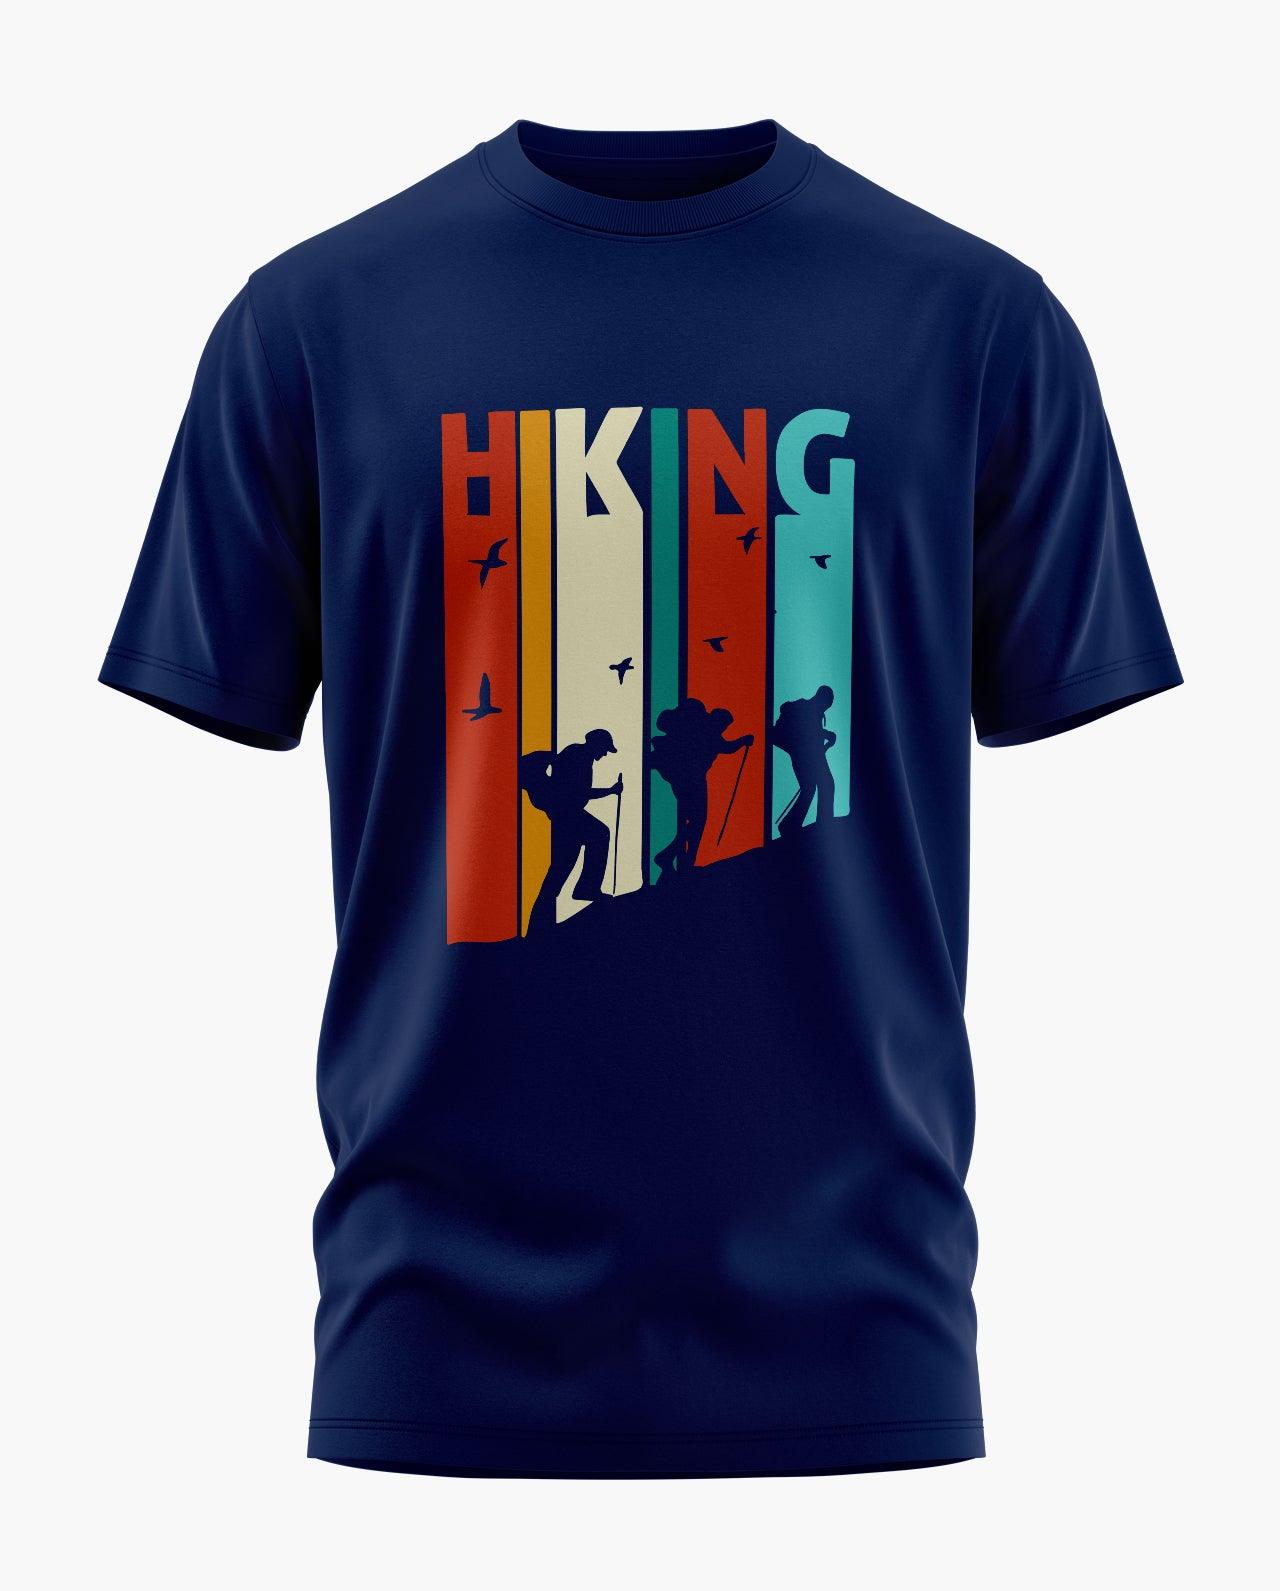 Hiking Typo T-Shirt - Aero Armour